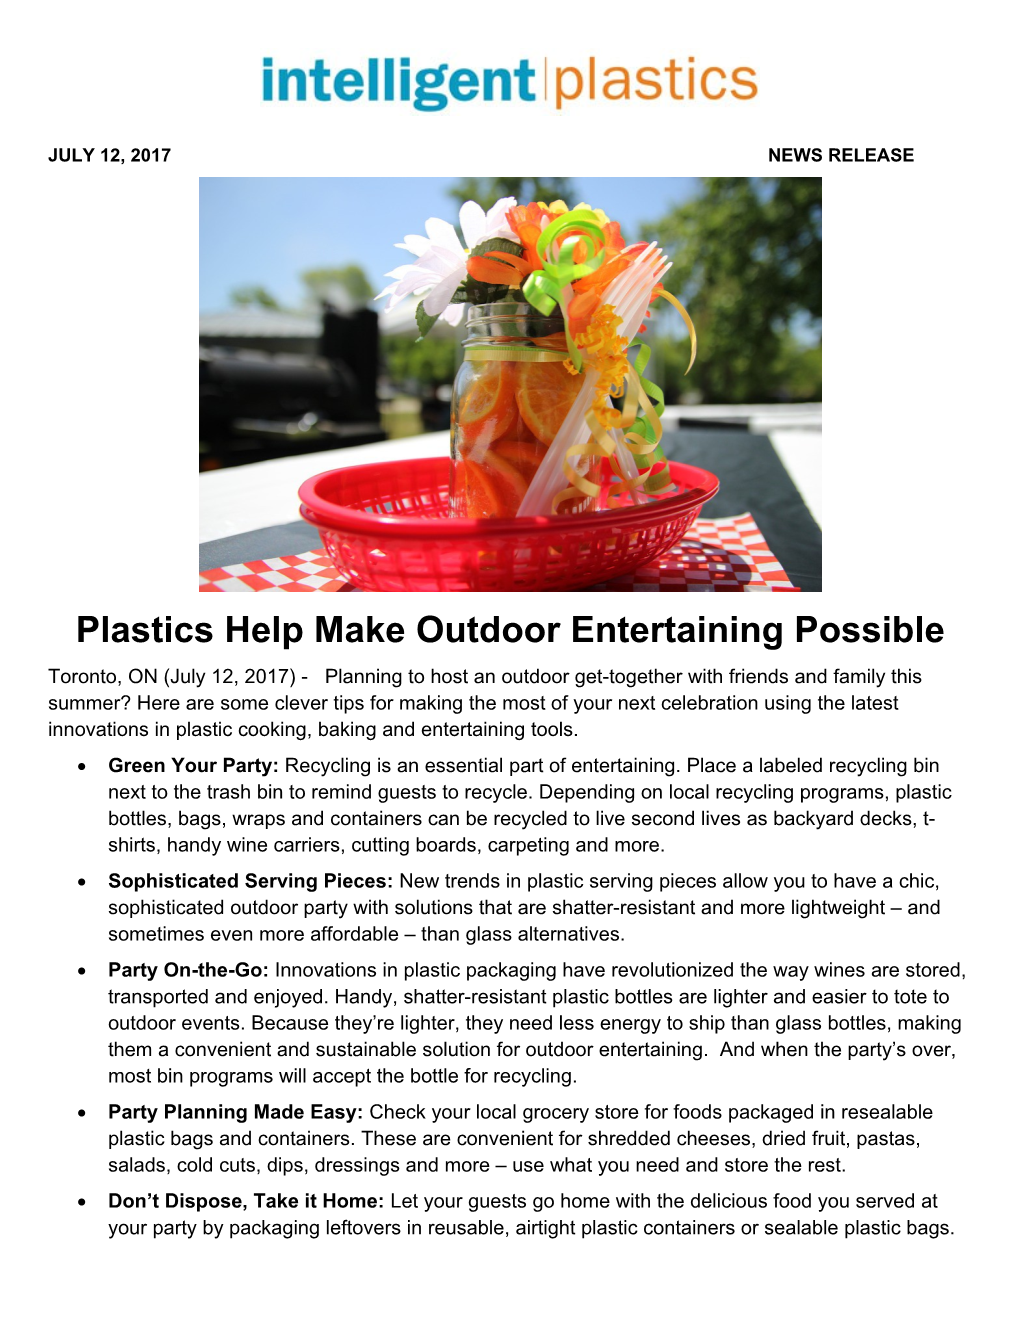 Plastics Help Make Outdoor Entertaining Possible